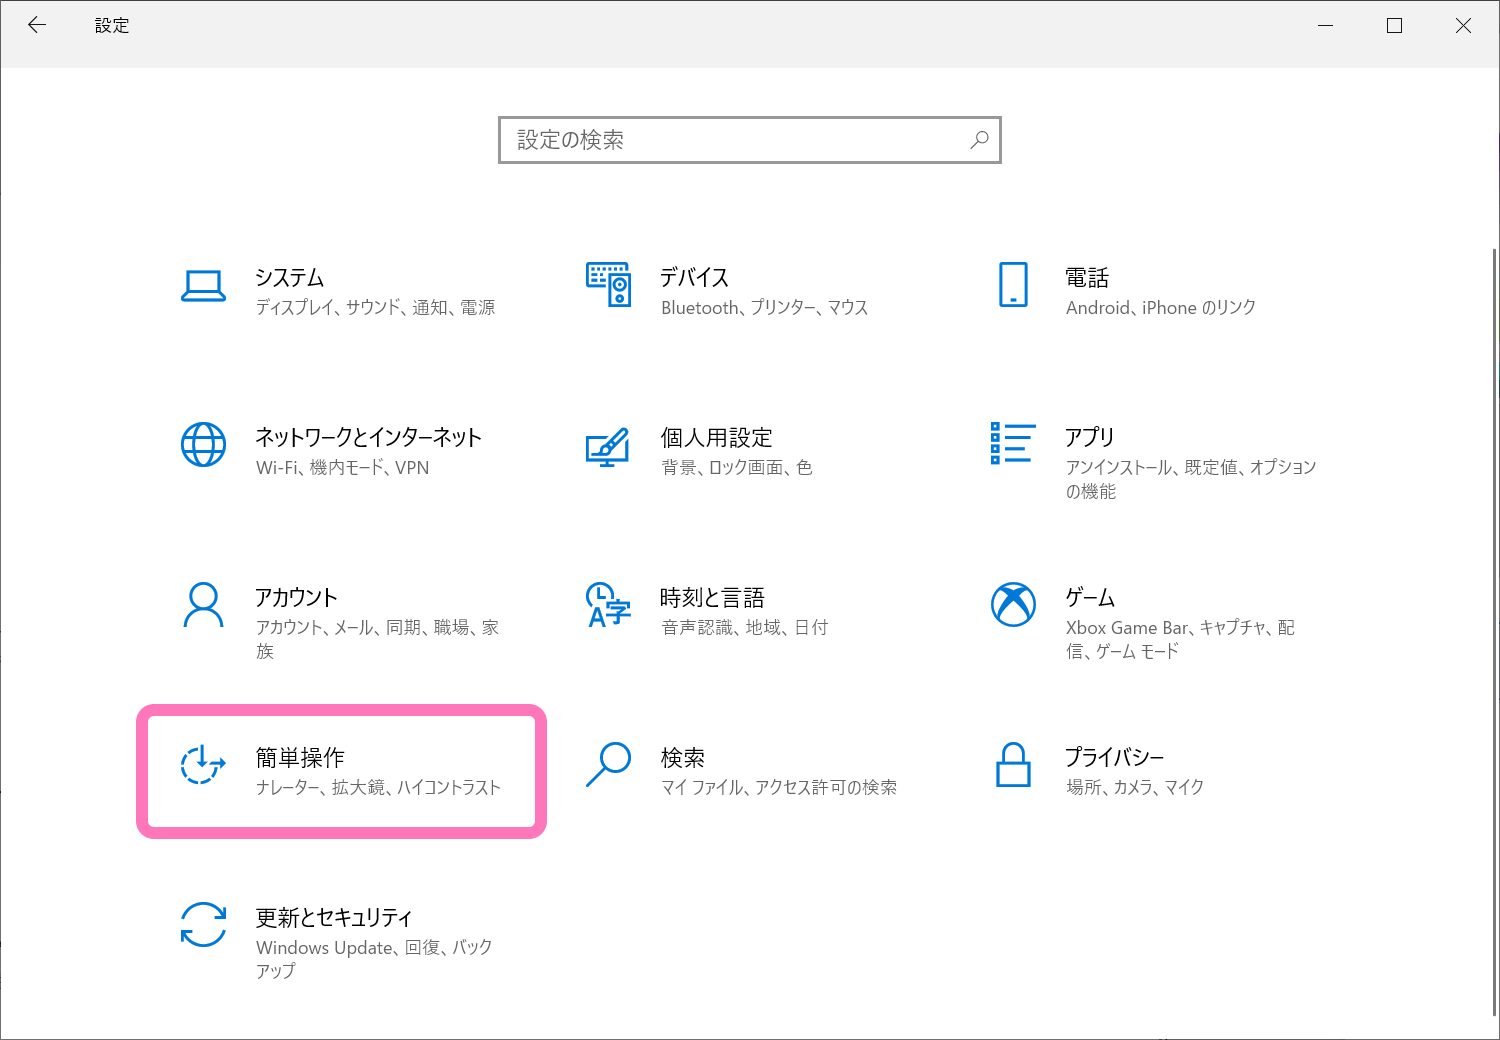 Windows 10 設定画面から [簡単操作] を選択